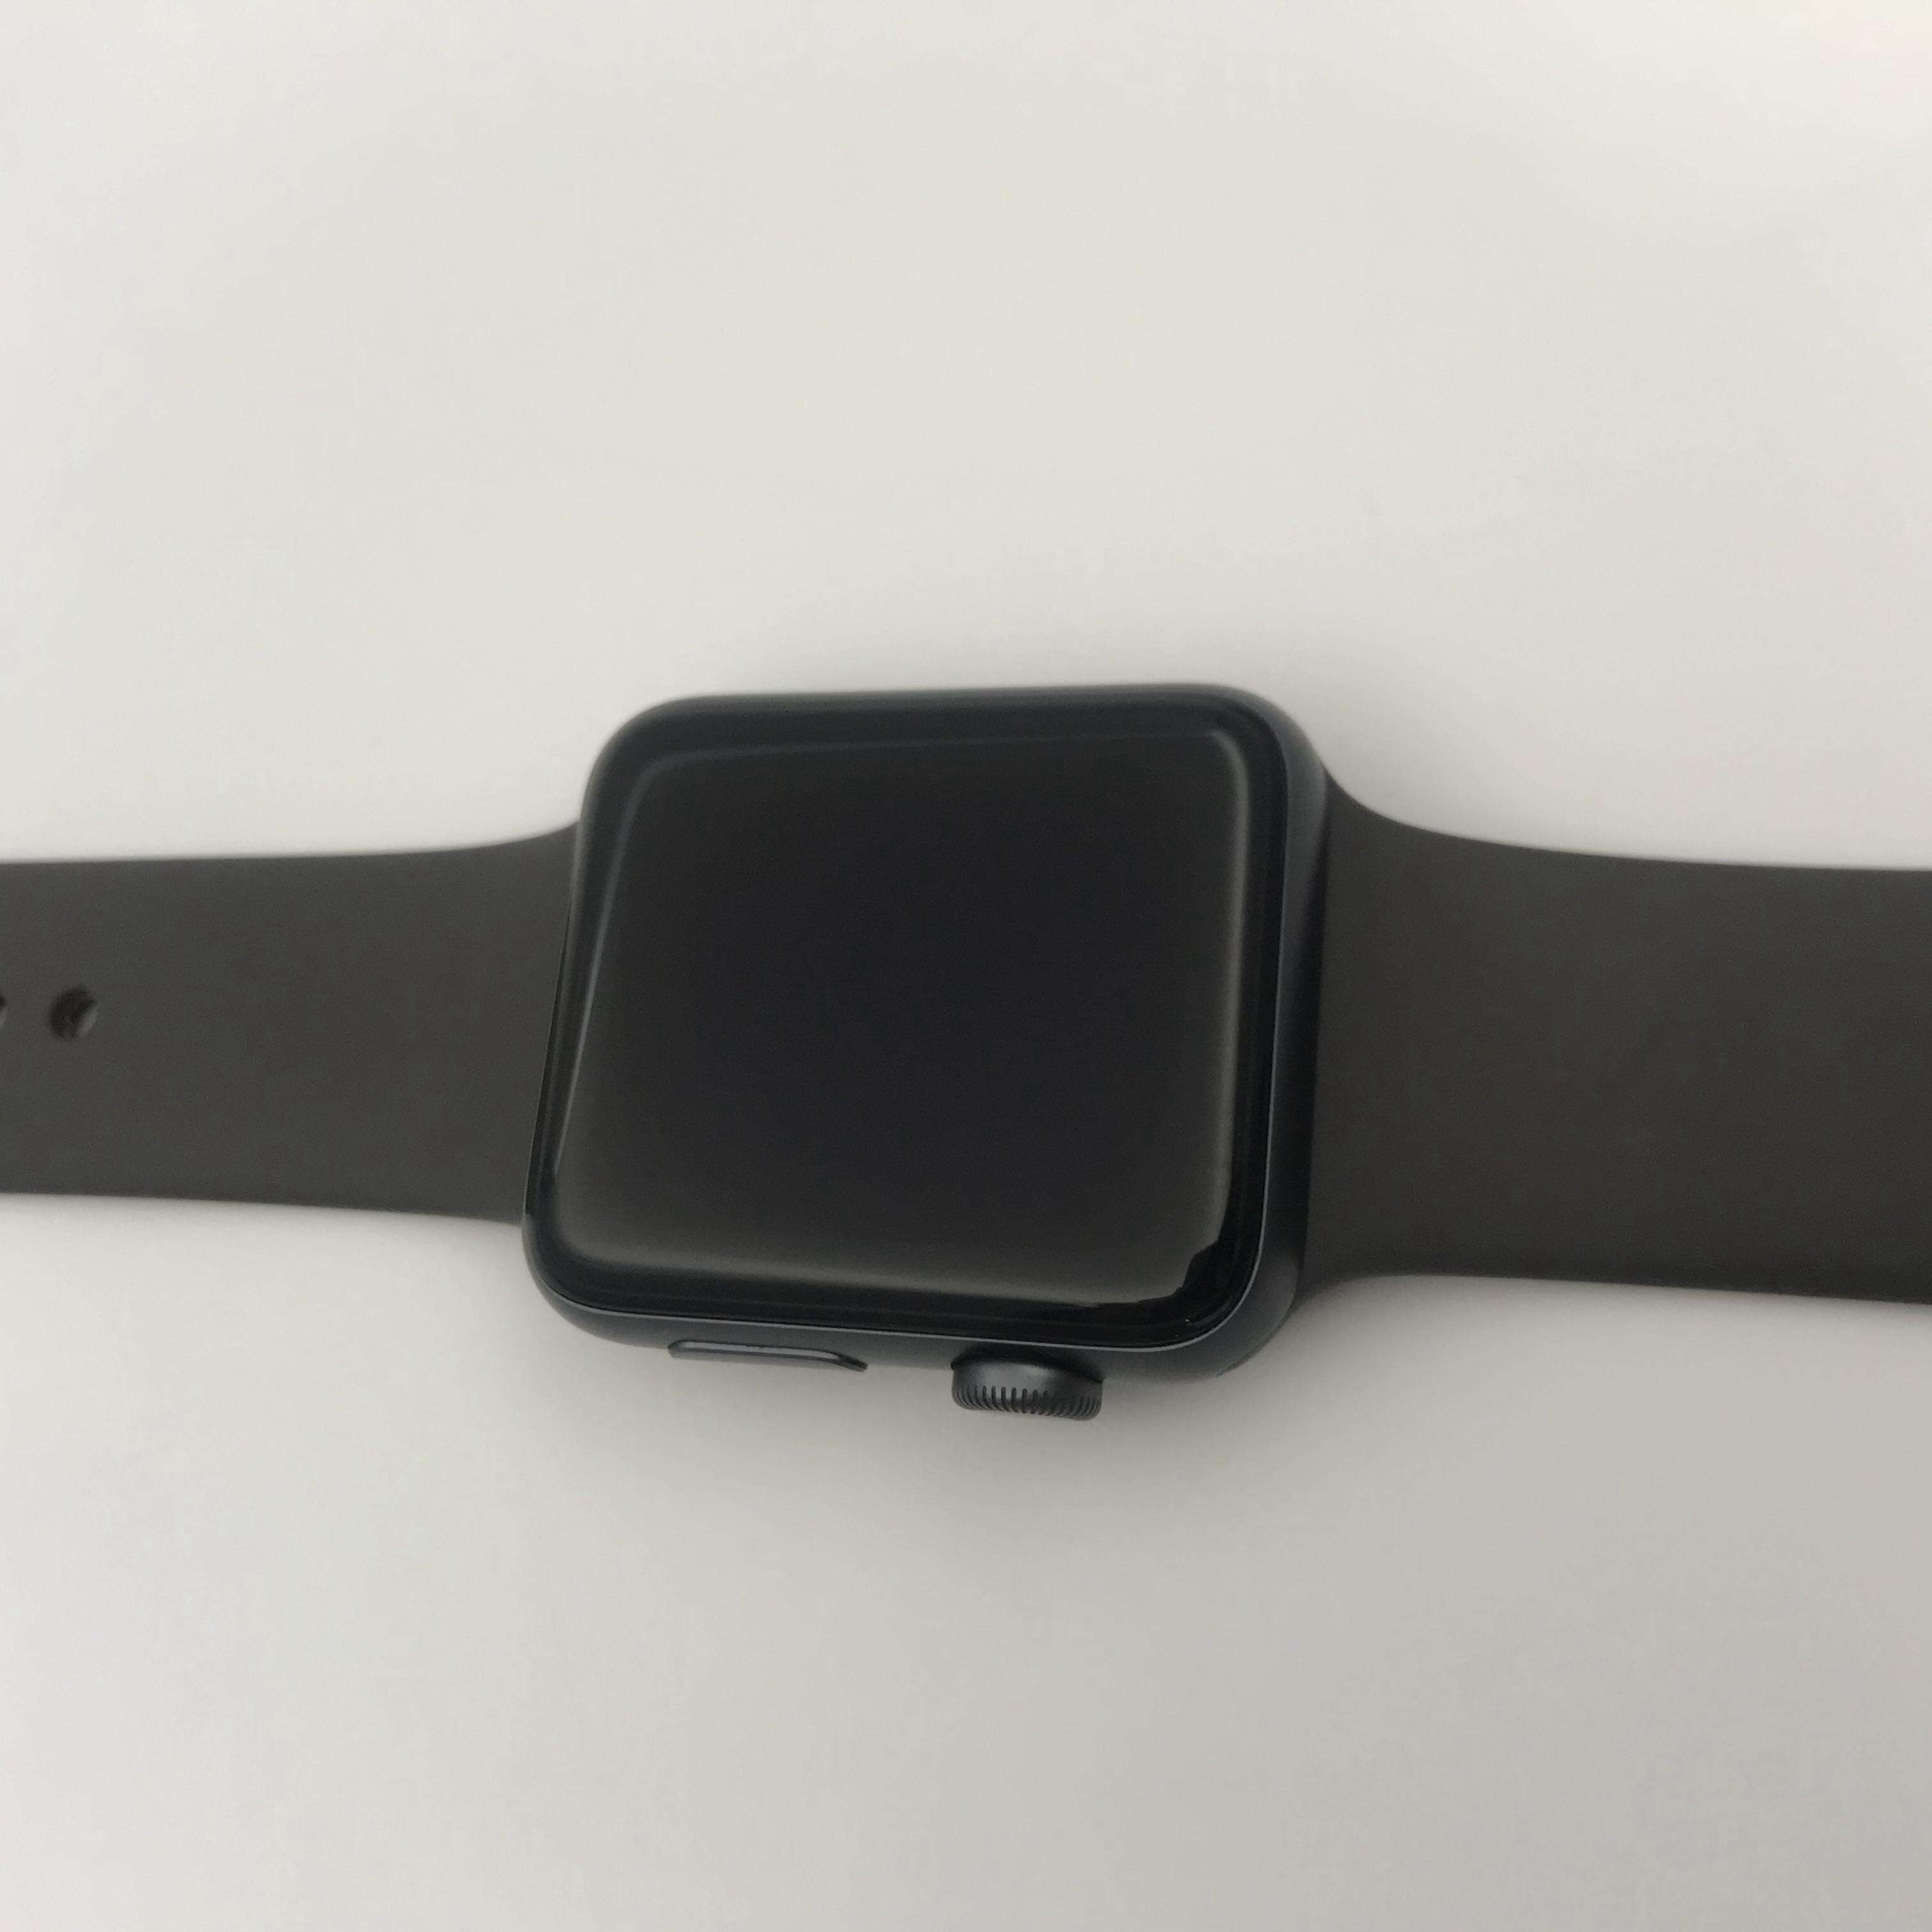 Apple Watch Series 3 铝金属表壳 42MM 国行GPS版